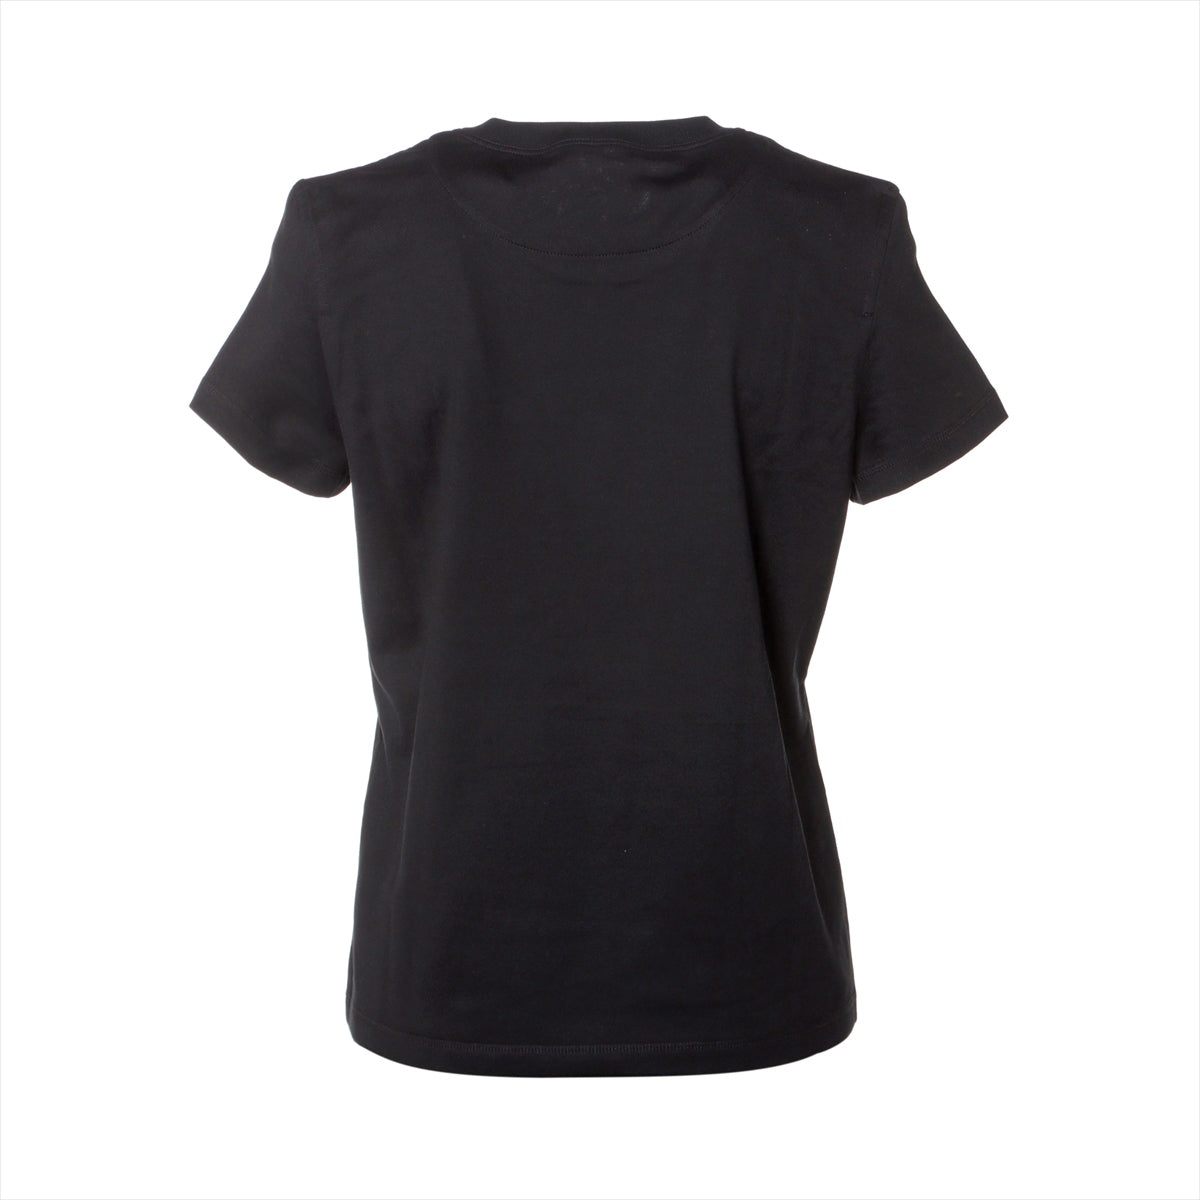 Hermès 23AW Cotton T-shirt 36 Ladies' Black  4E4615DA H logo embroidery with tag